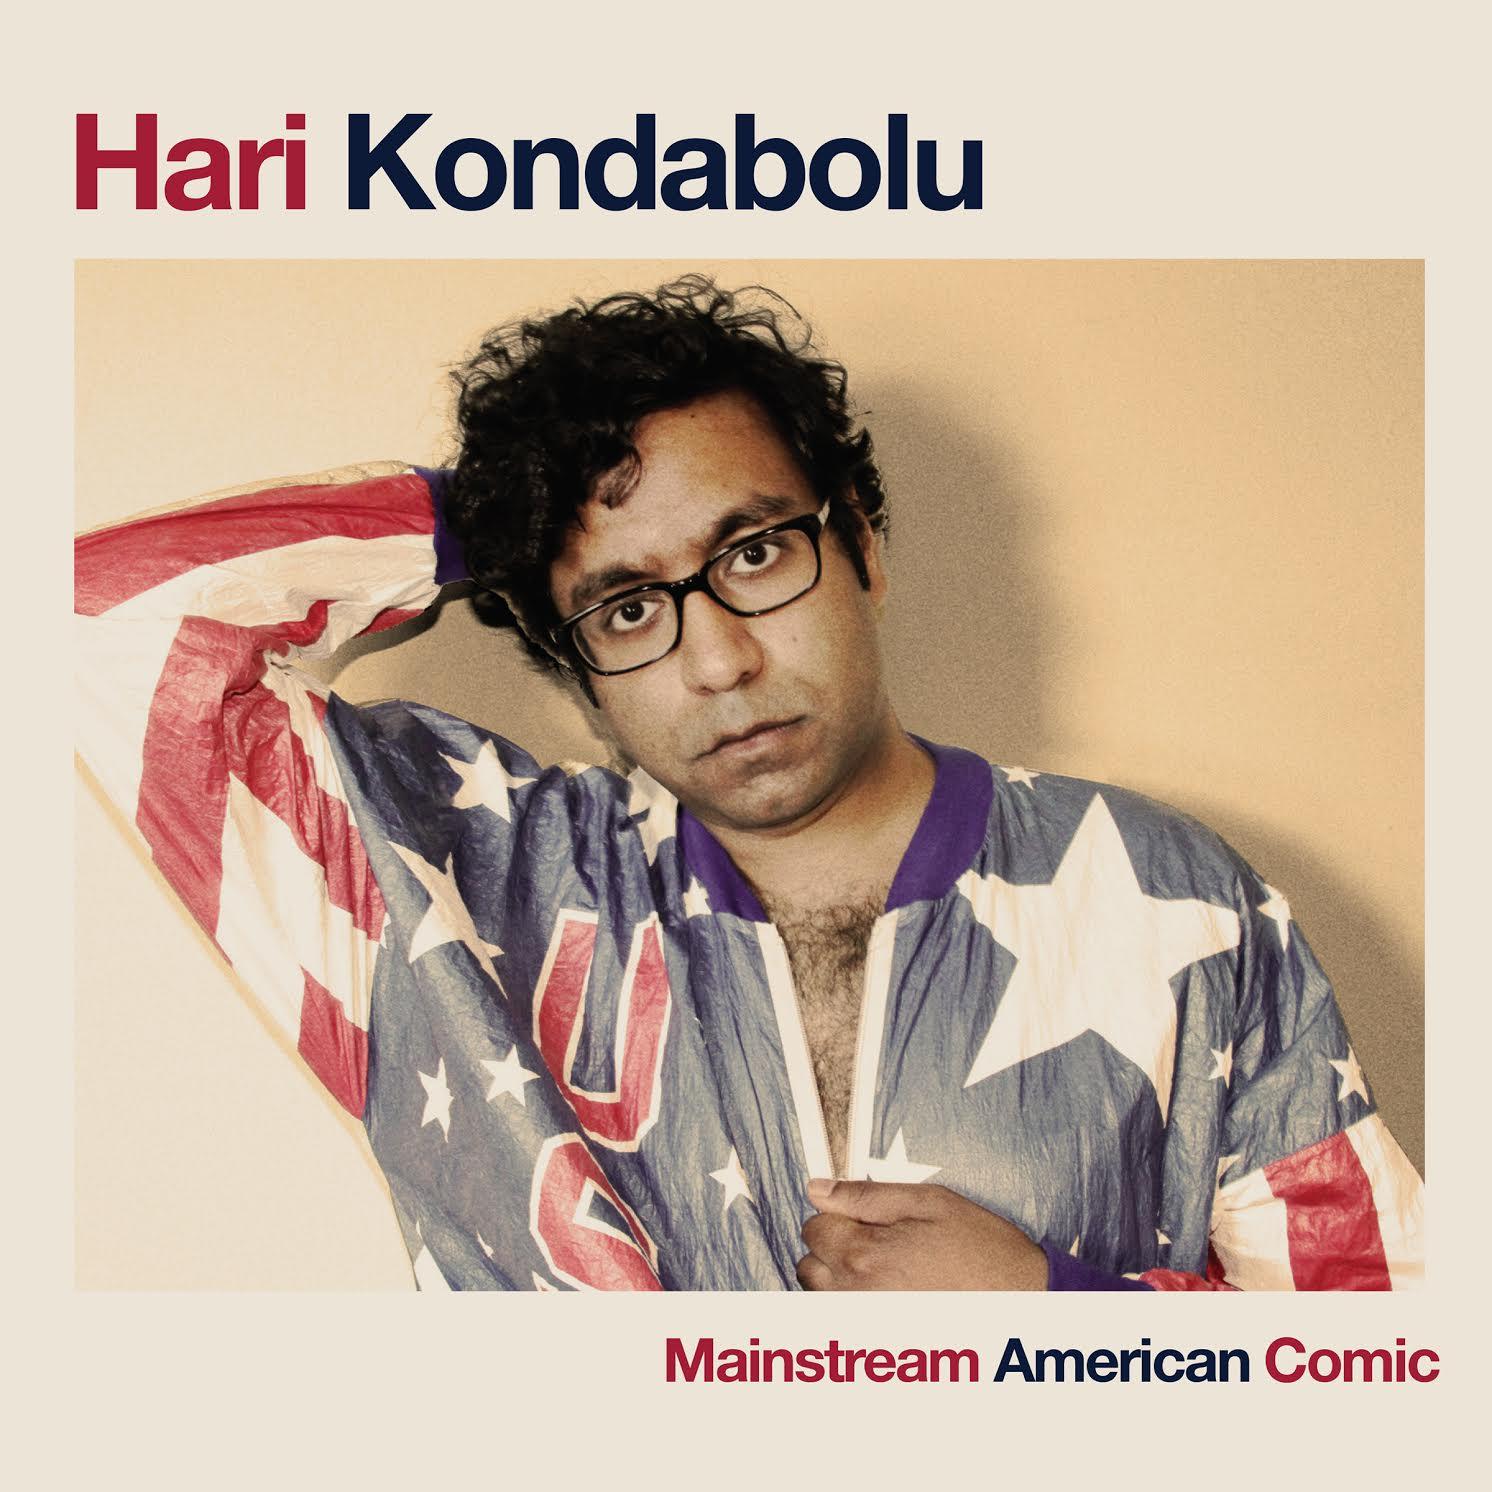 Album cover with Kondabolu is USA jacket